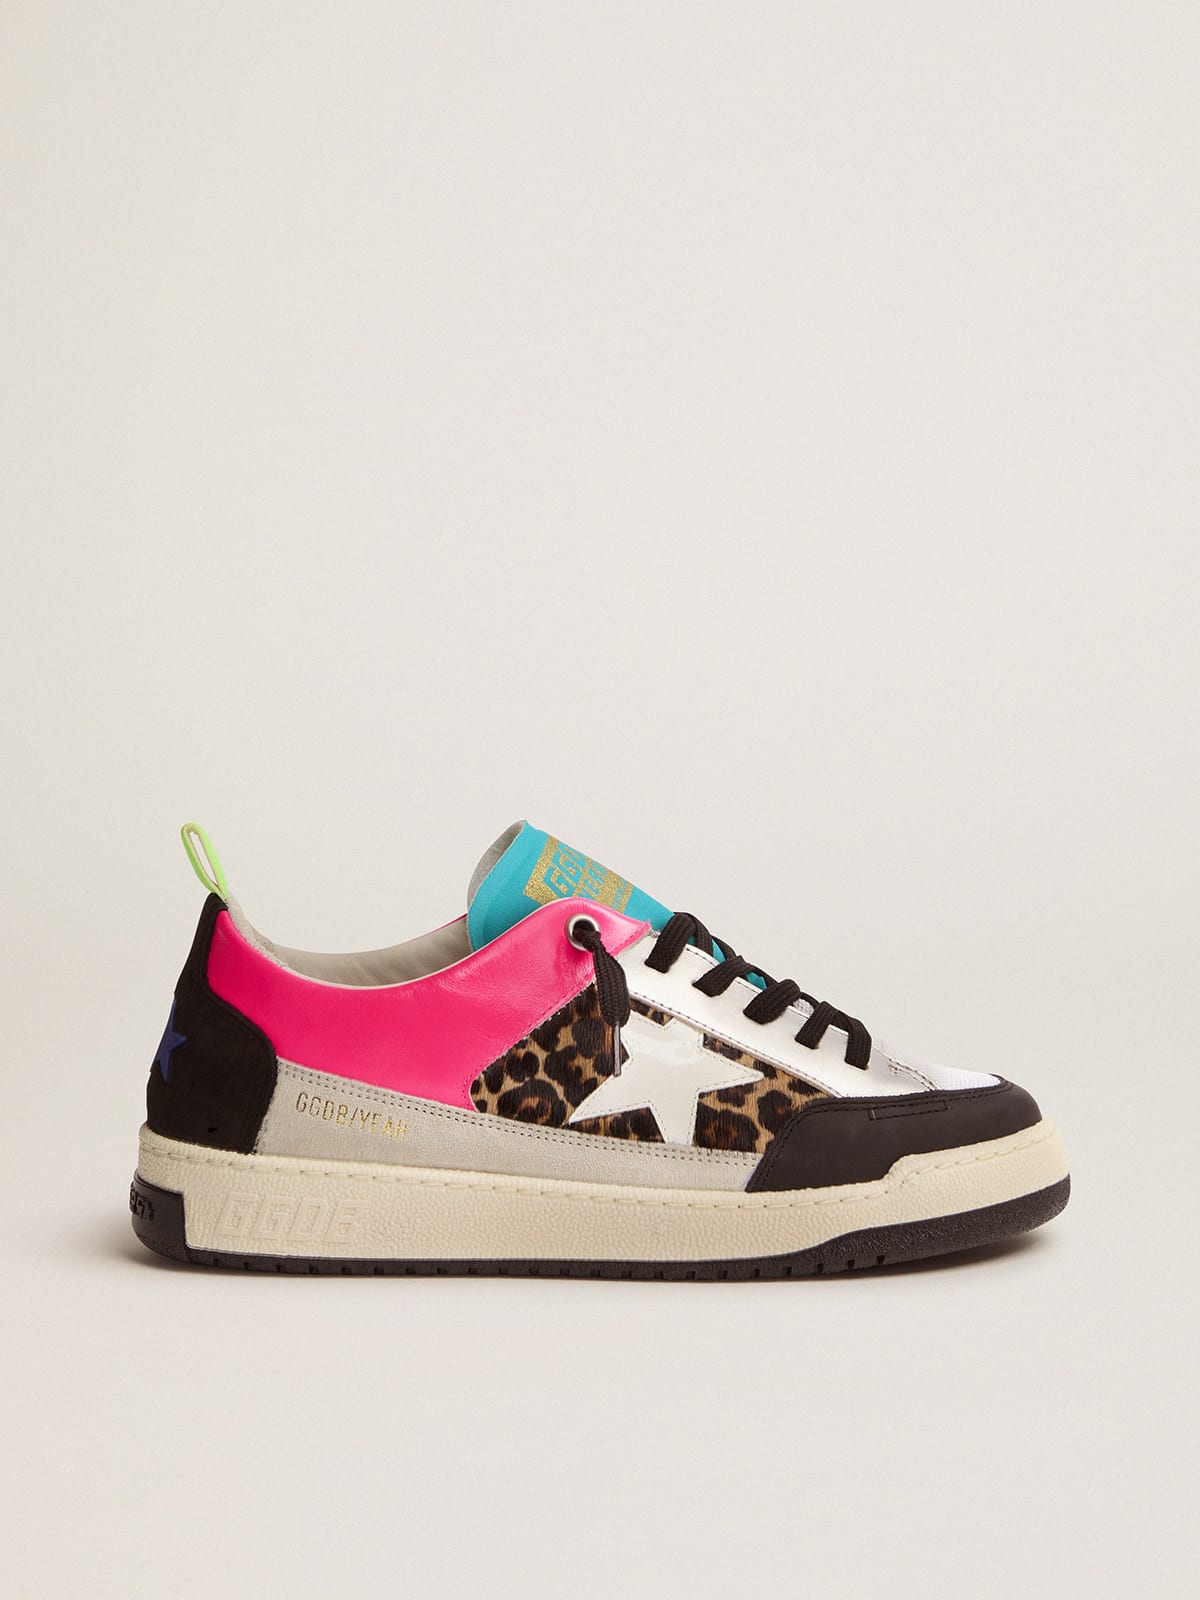 Women's fuchsia and leopard-print Yeah sneakers